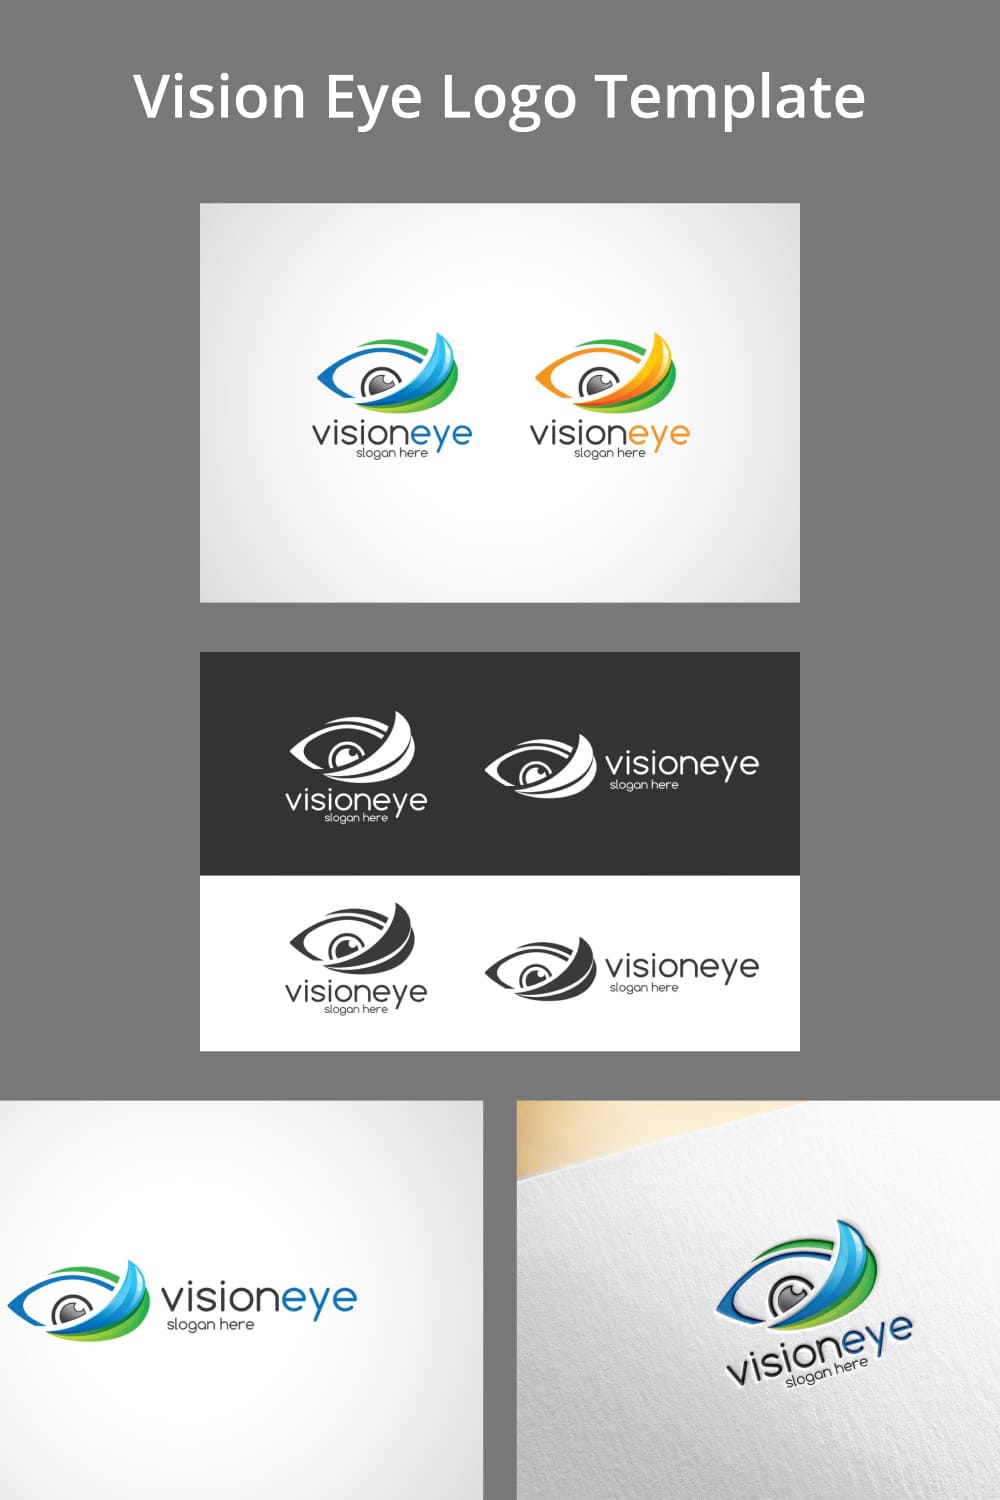 Vision Eye Logo Template - pinterest image preview.